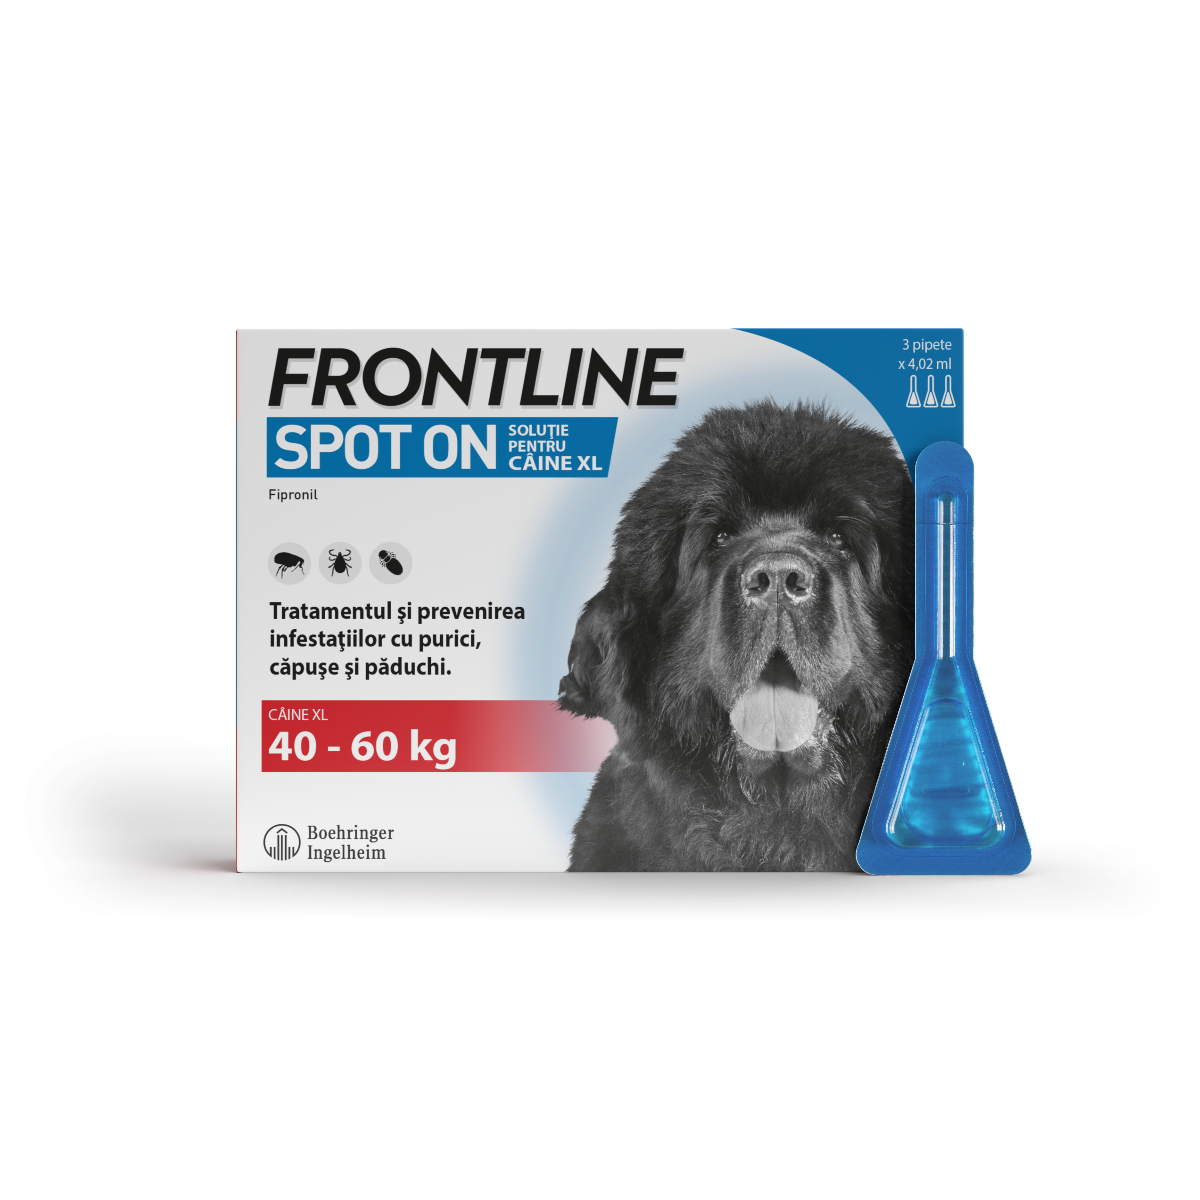 Frontline Spot On XL pentru caini 40-60 kg, 3 pipete, Frontline